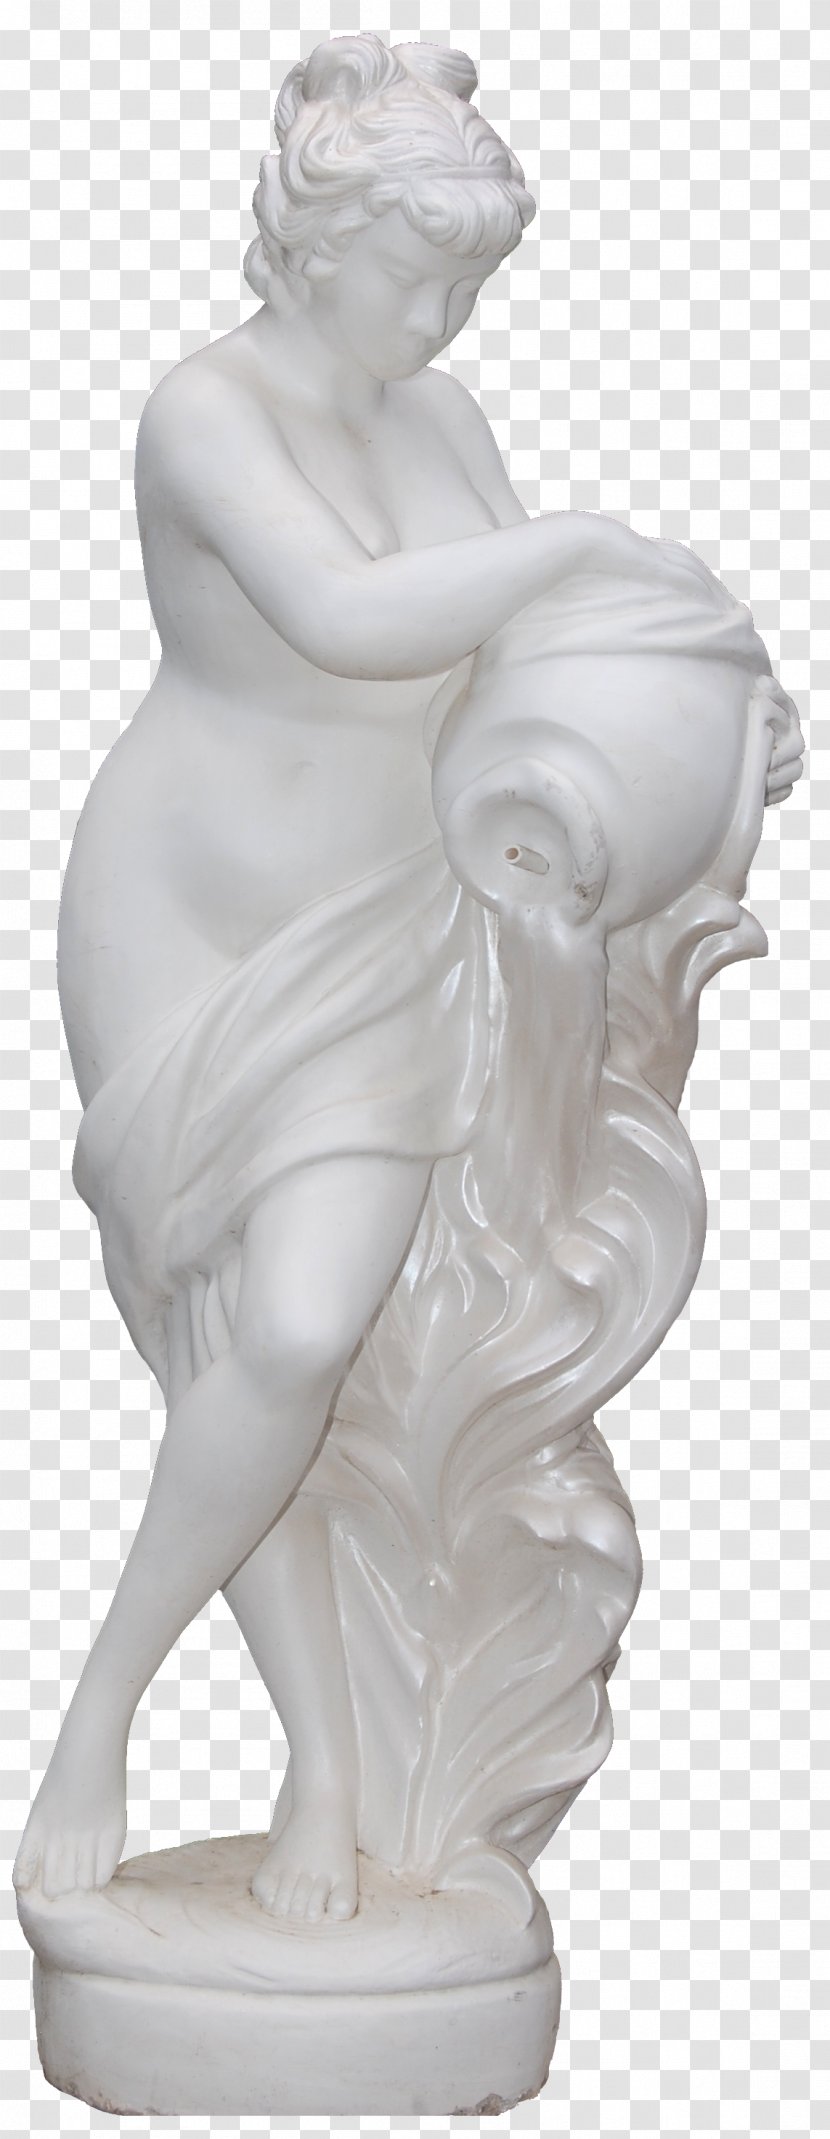 Statue Of Liberty Classical Sculpture Stone Carving - Artwork Transparent PNG